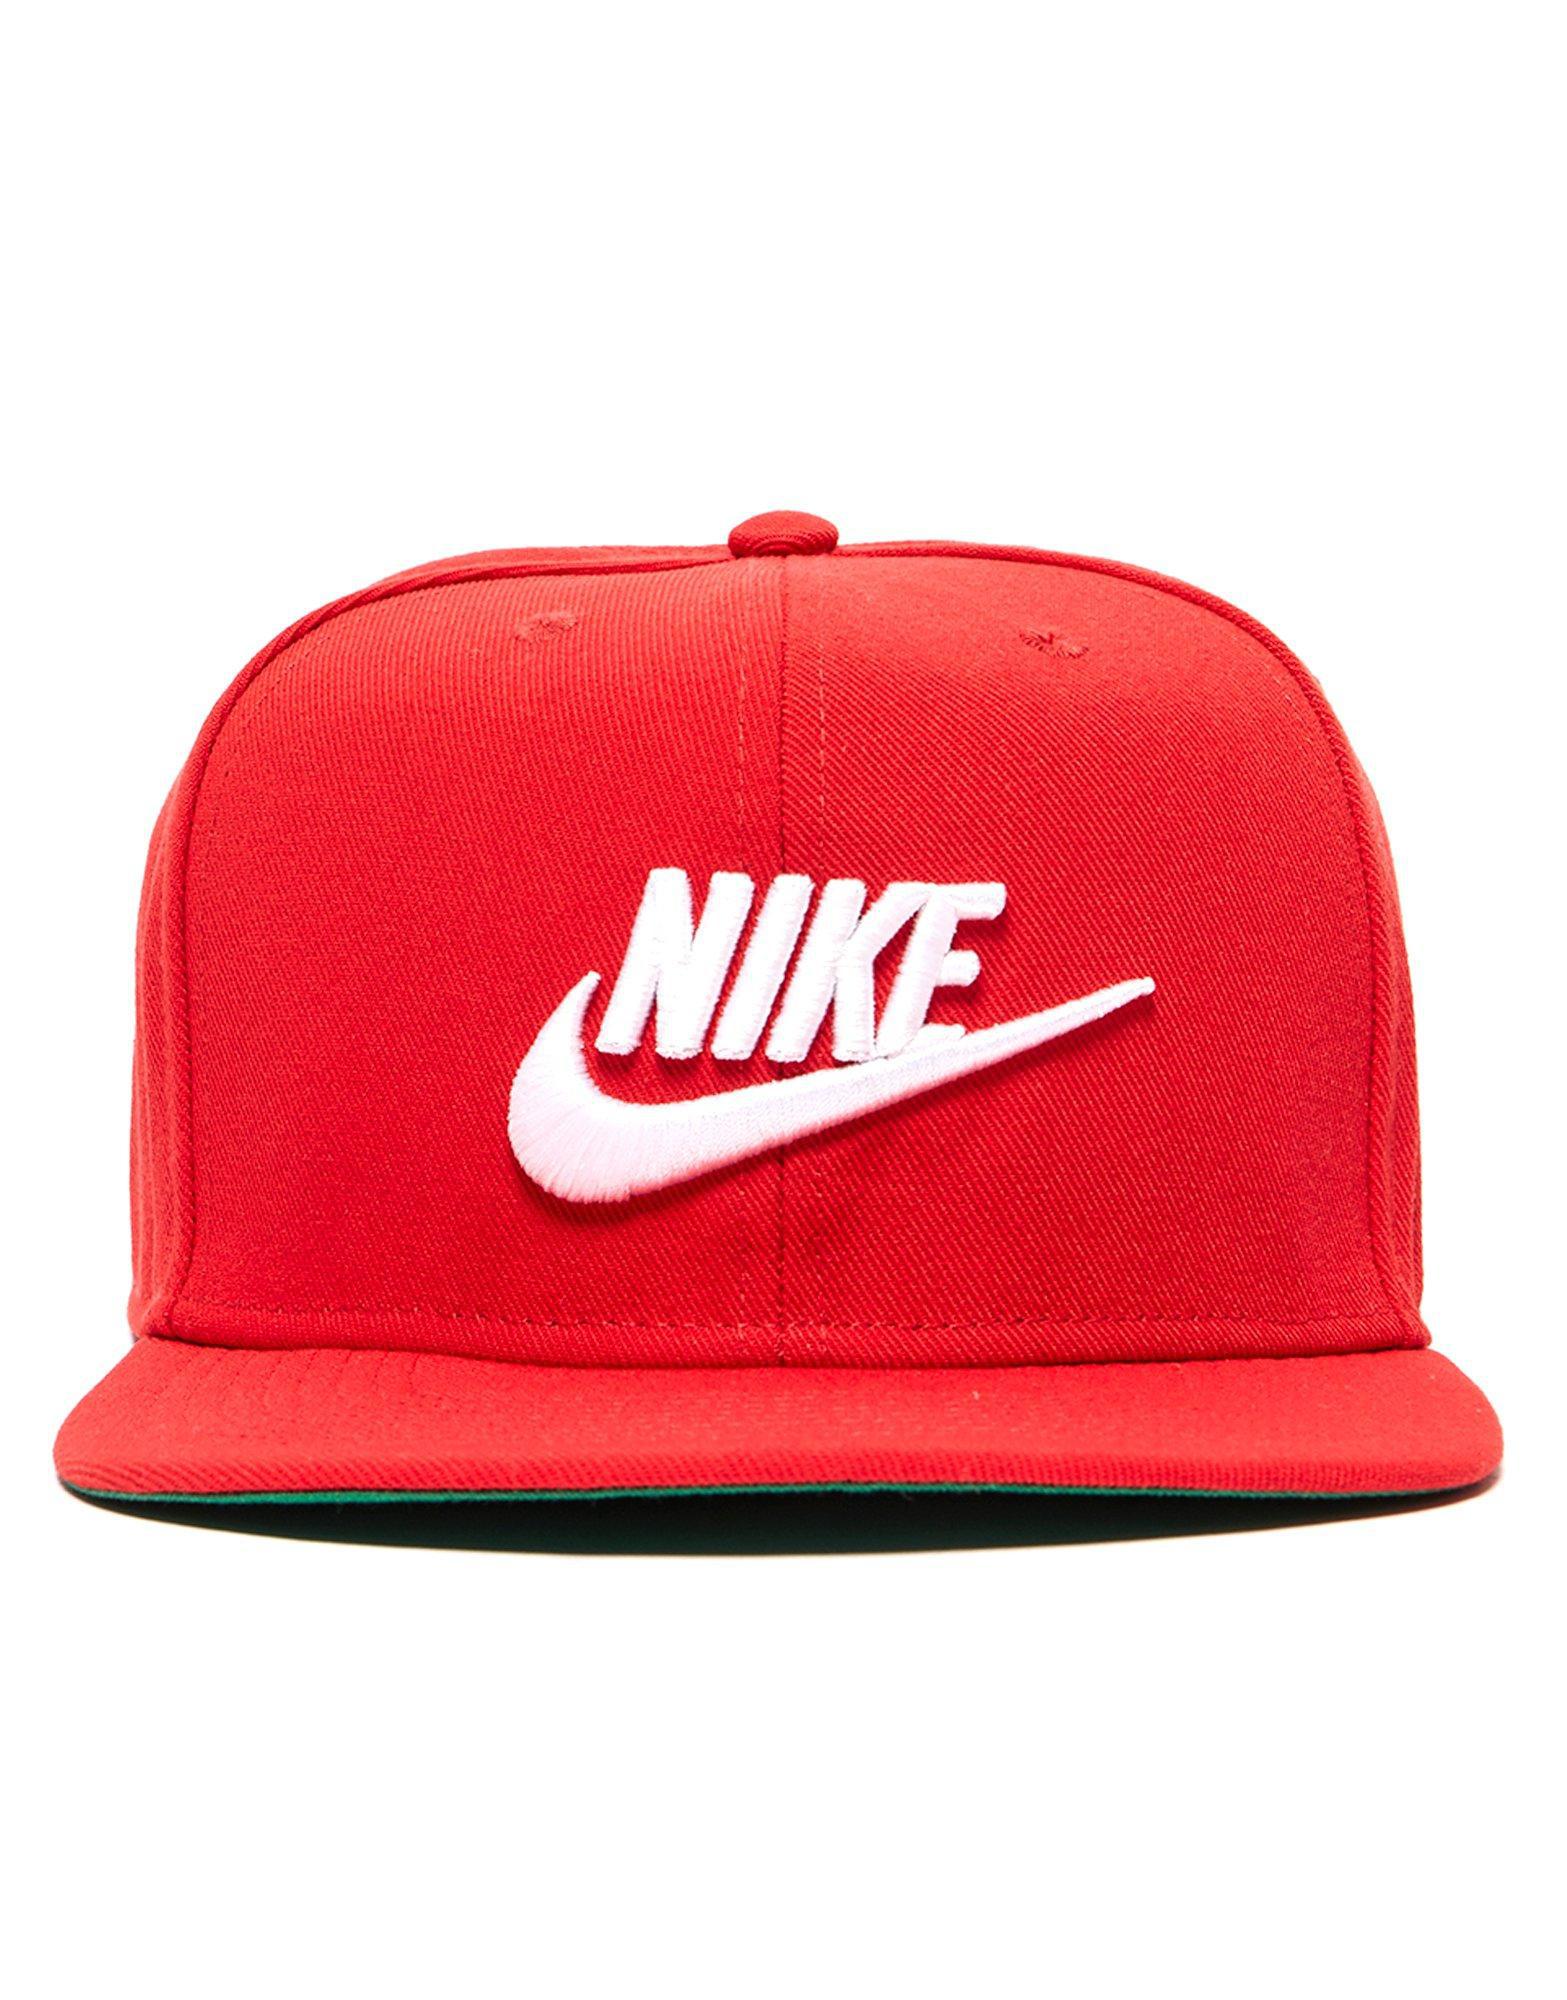 red white nike hat